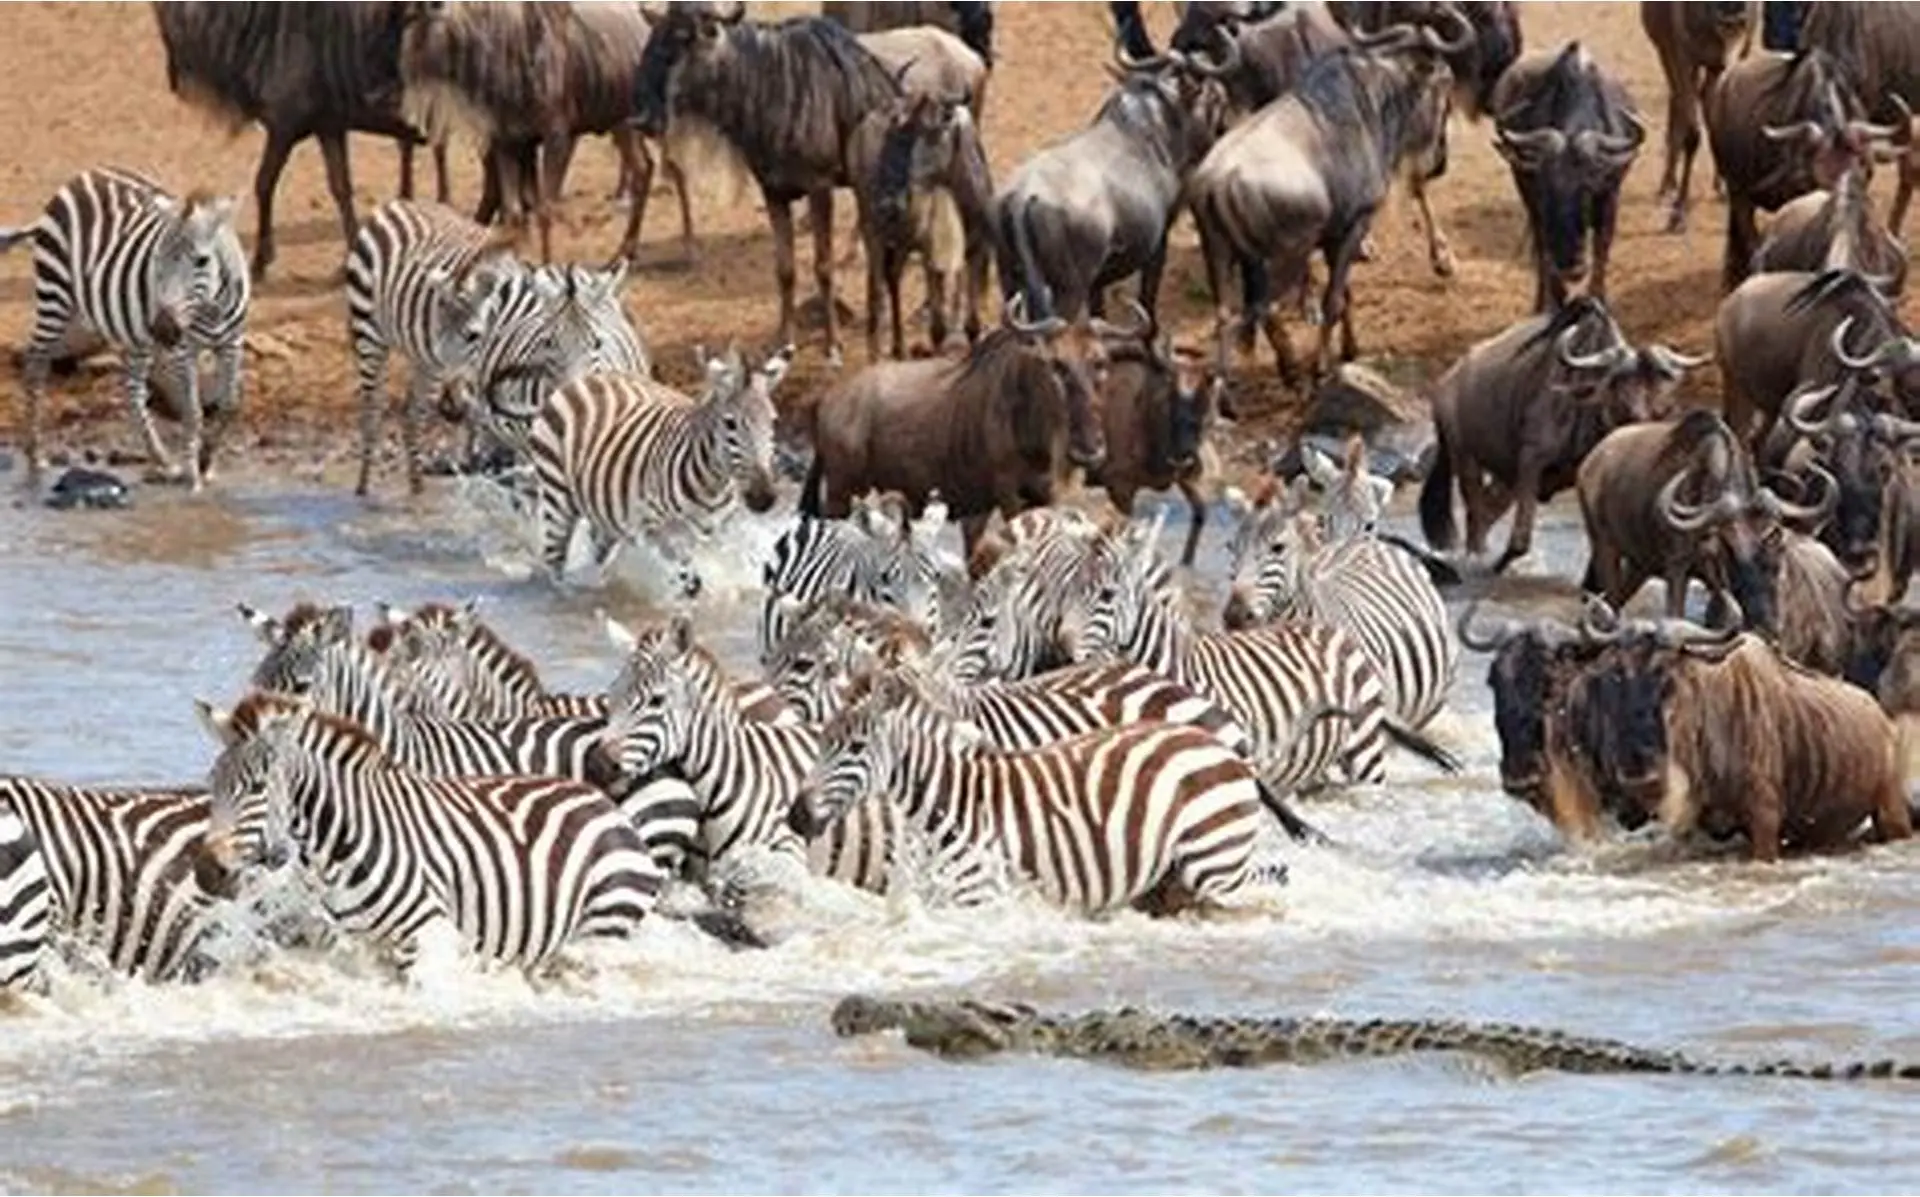 Masai Mara migration Safari - Mara river crossing.